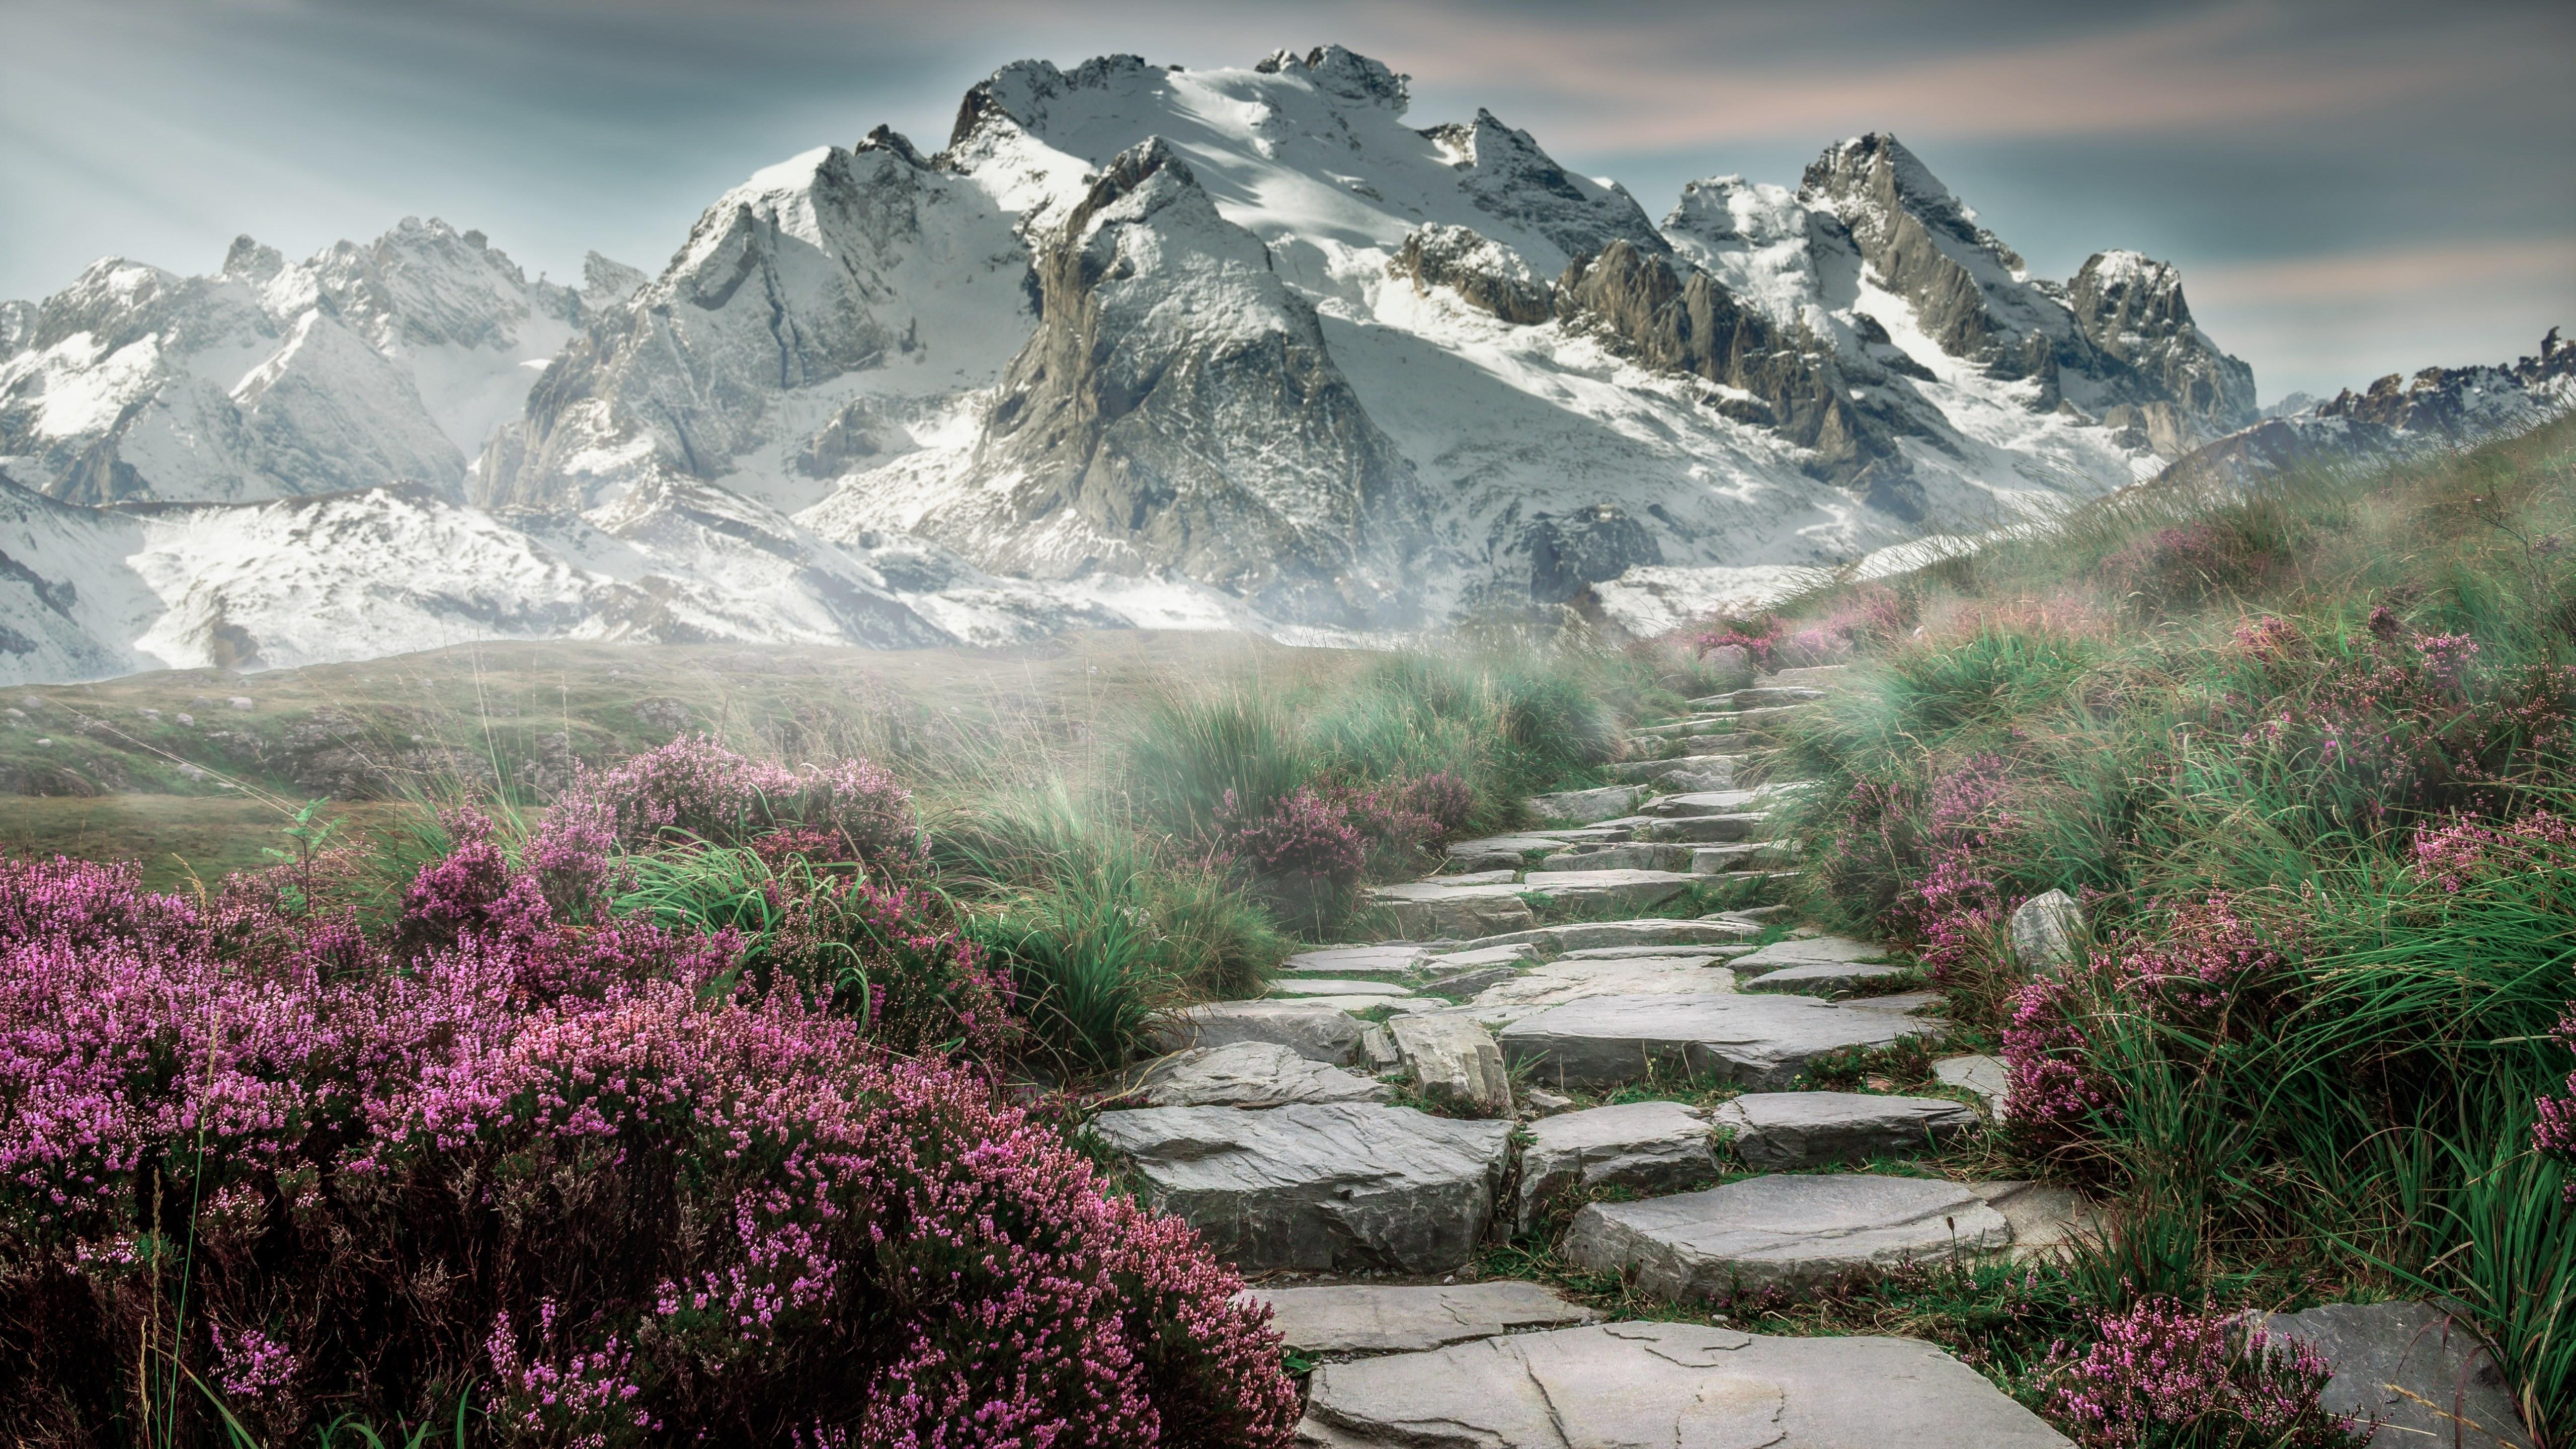 Download wallpaper: Surreal mountain landscape 5120x2880